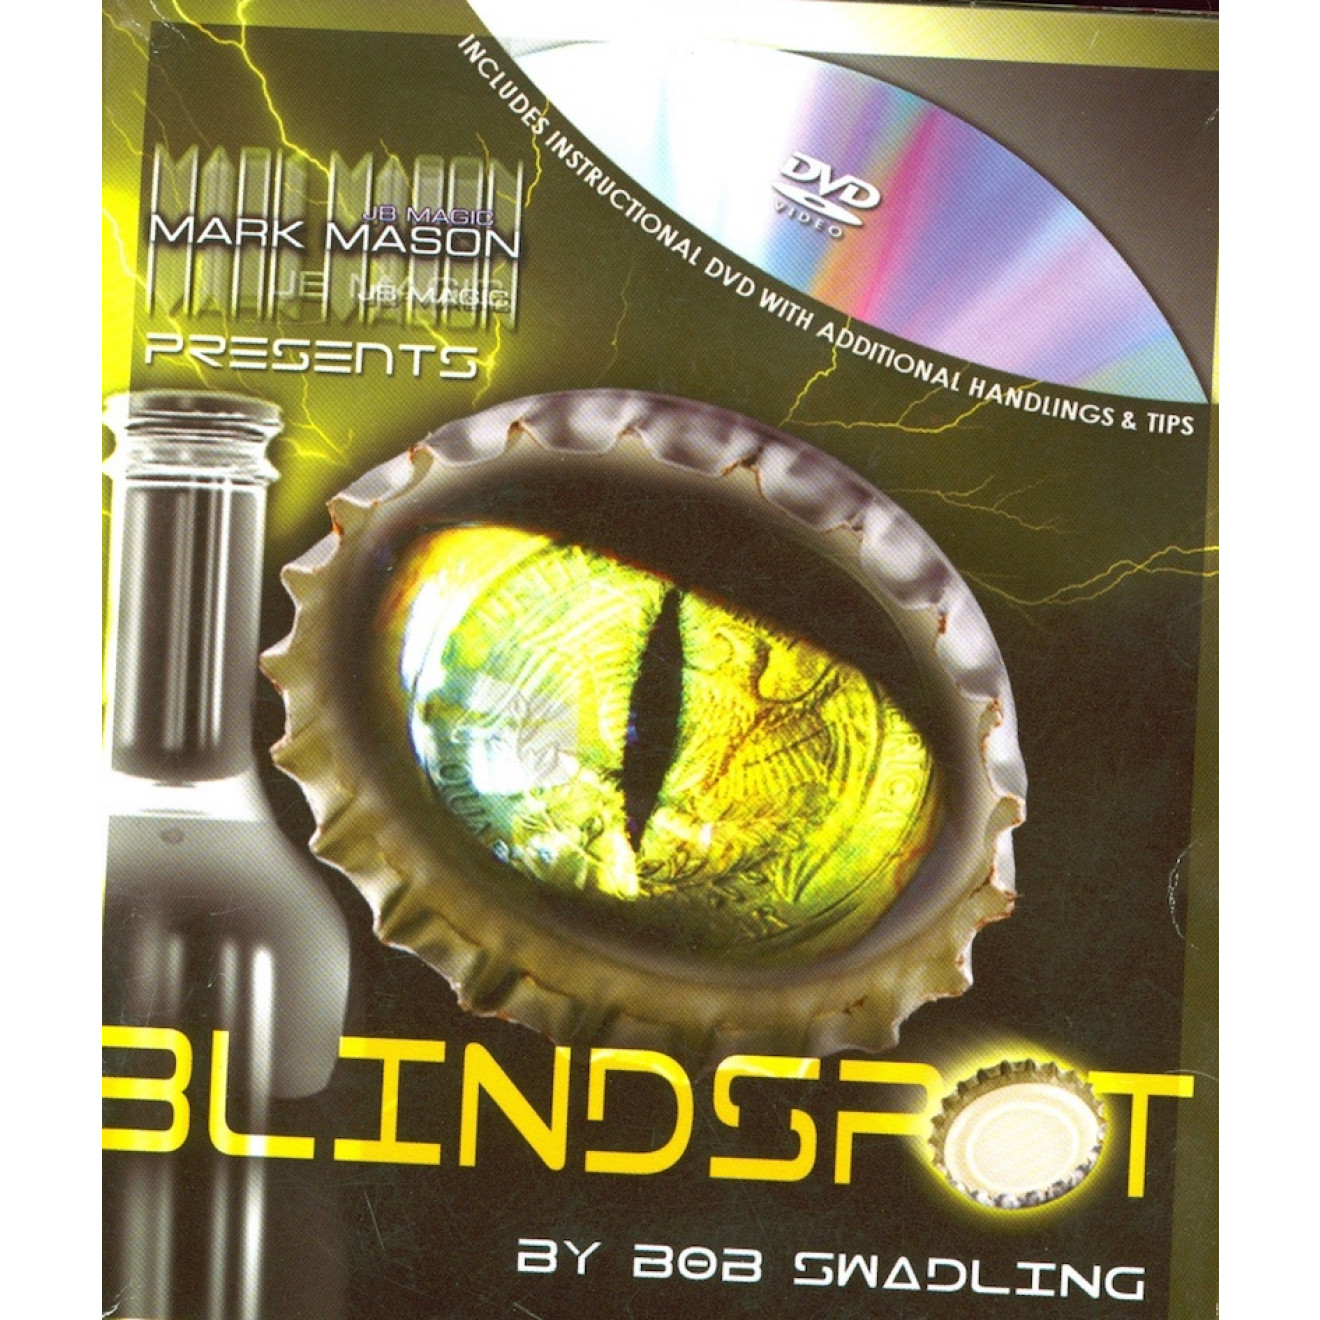 Blindspot (Gimmick and DVD) by Bob Swadling and JB Magic